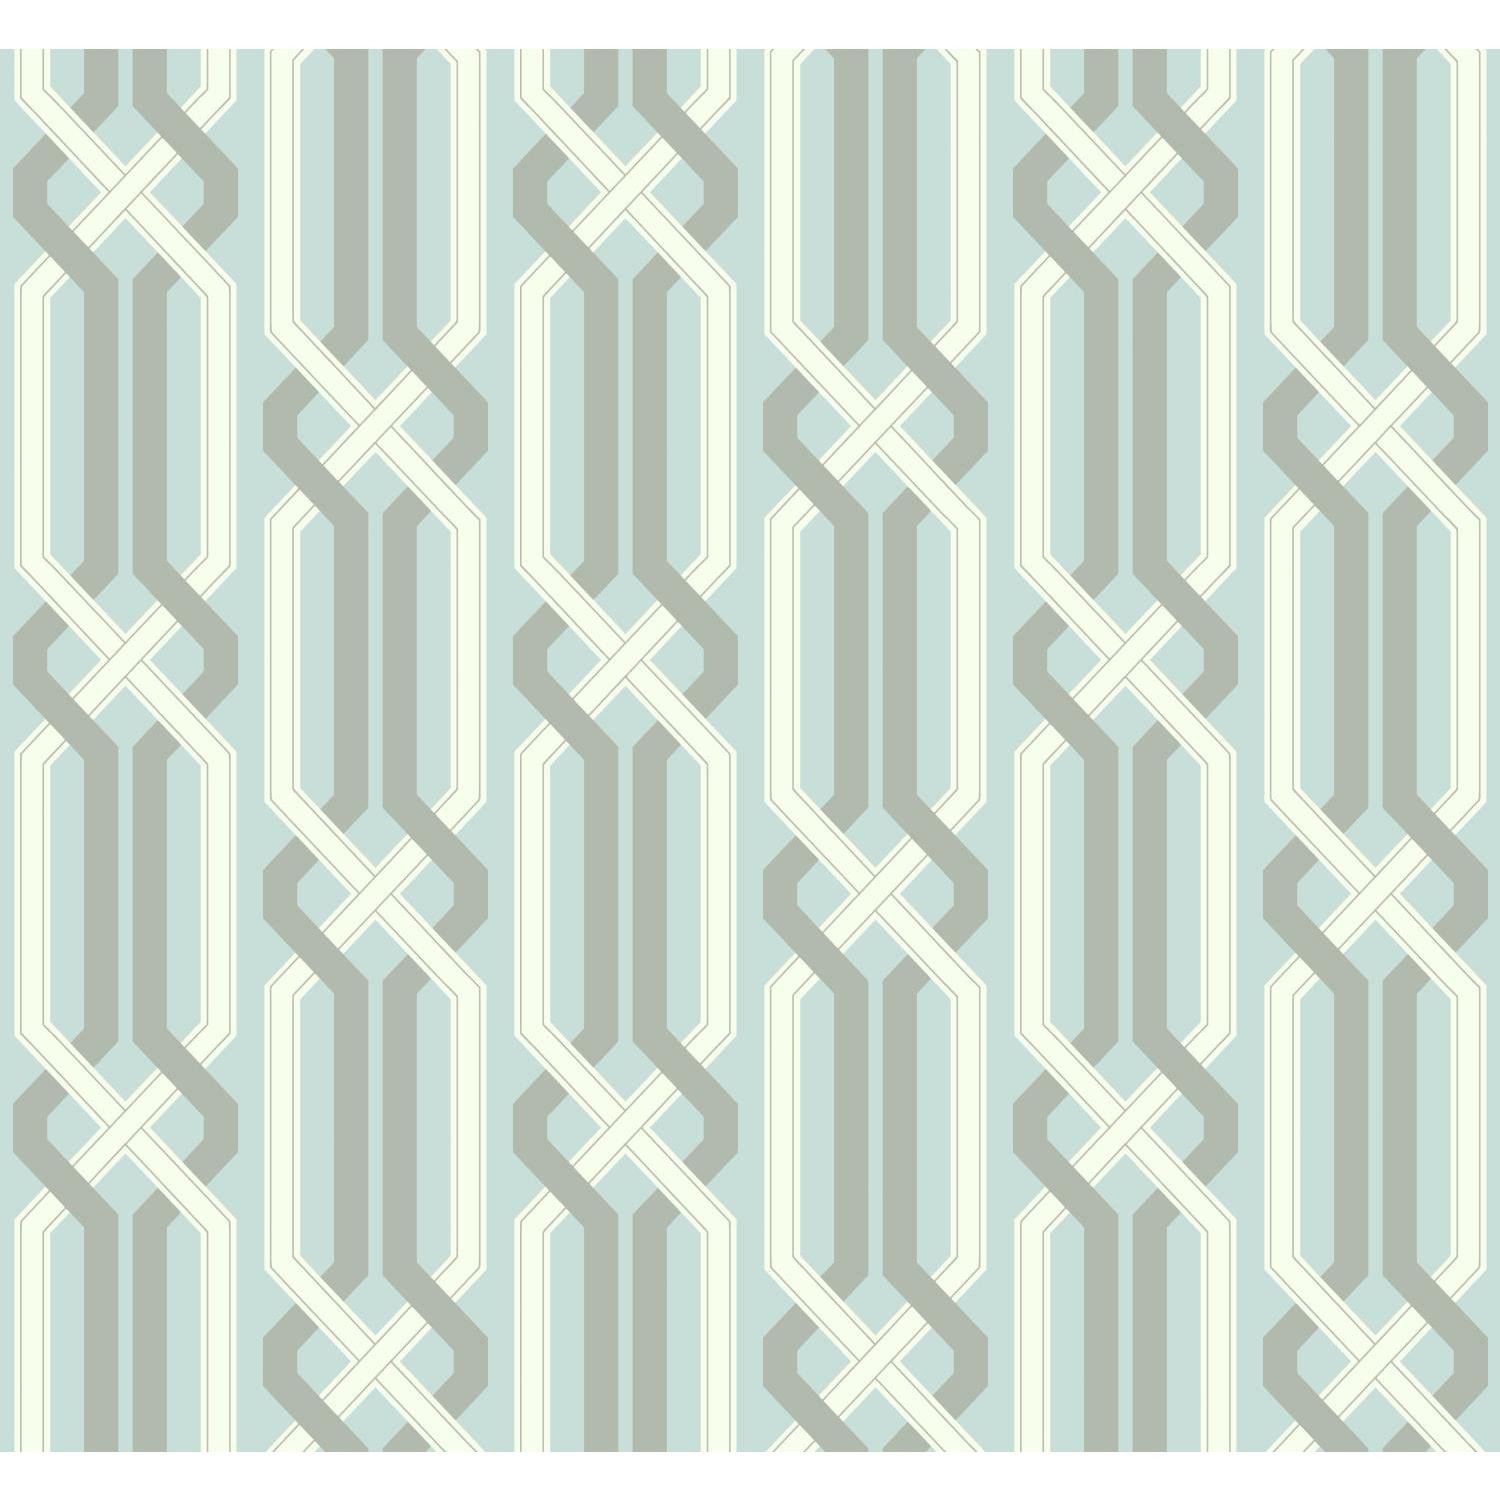 Carey Lind Vibe Criss Cross 27 x 27 Geometric Wallpaper by York